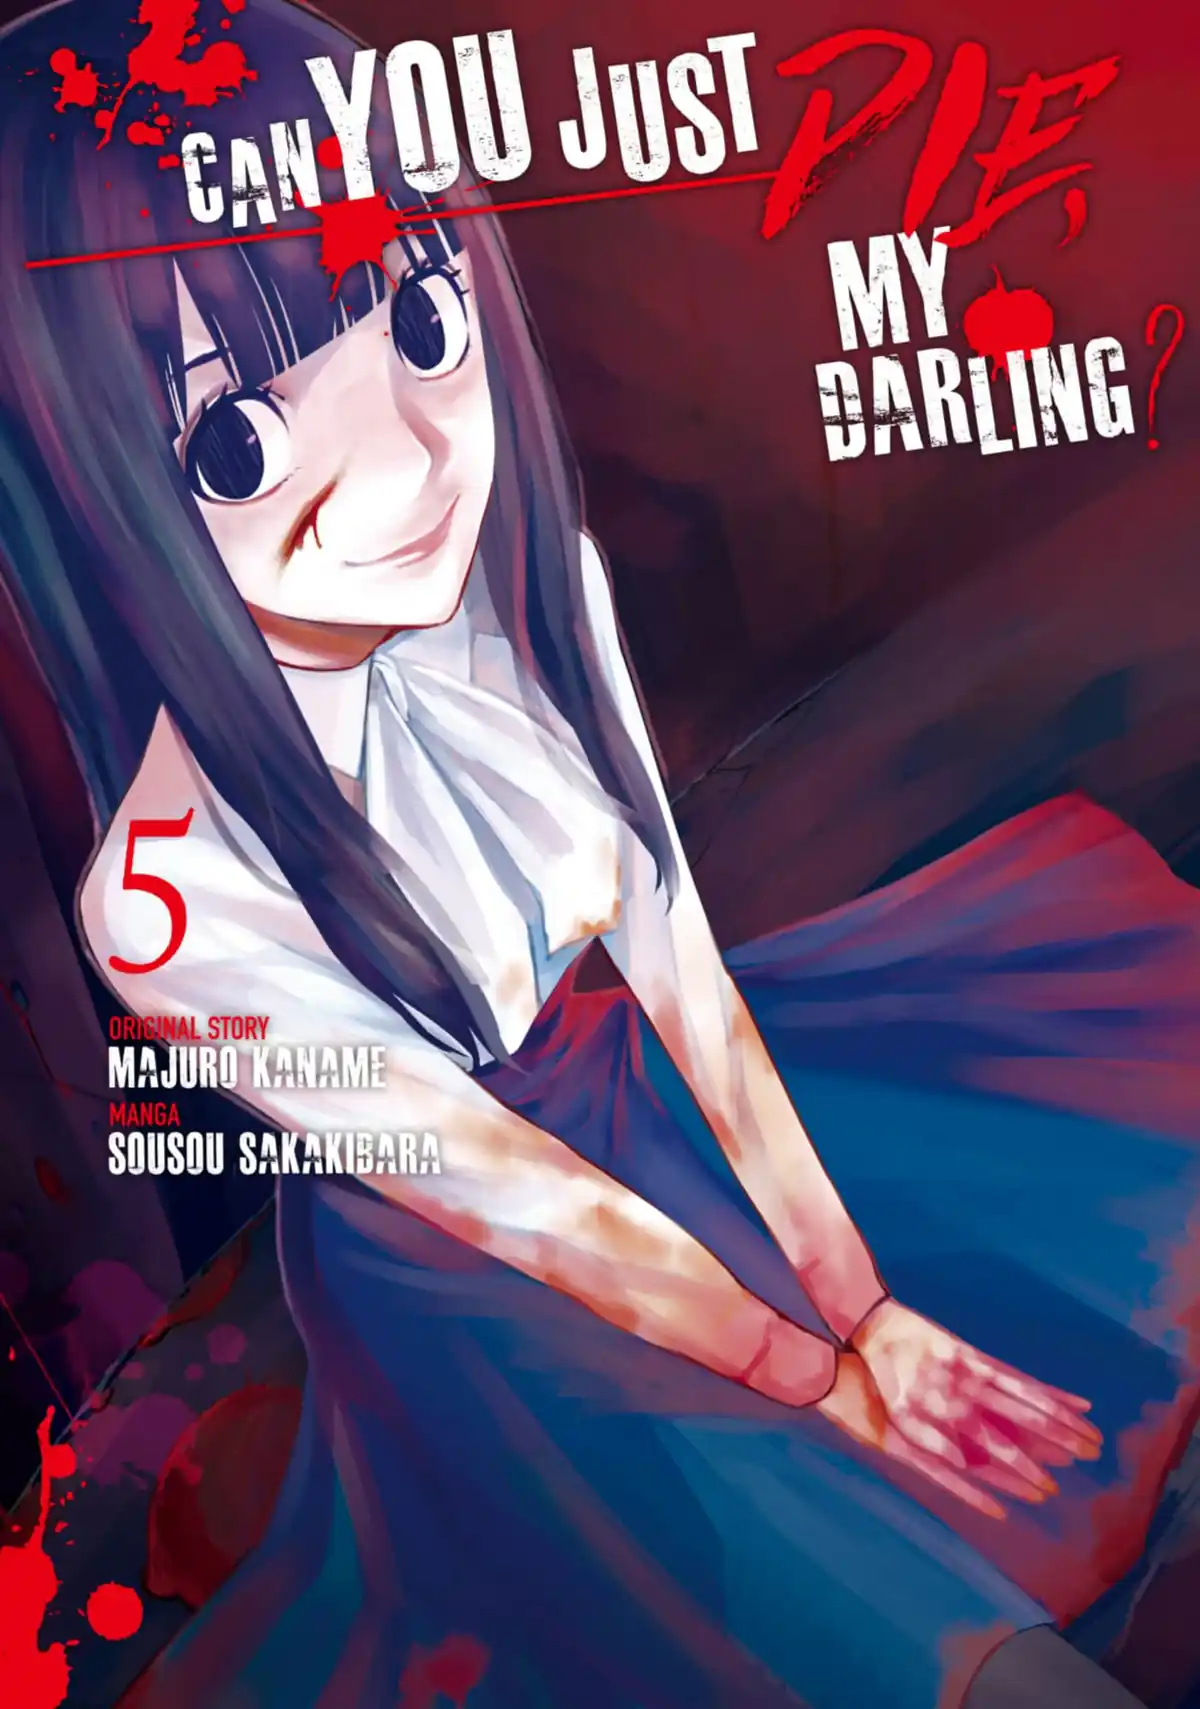 Can You Just Die Darling Can You Just Die, My Darling? | Manga Planet